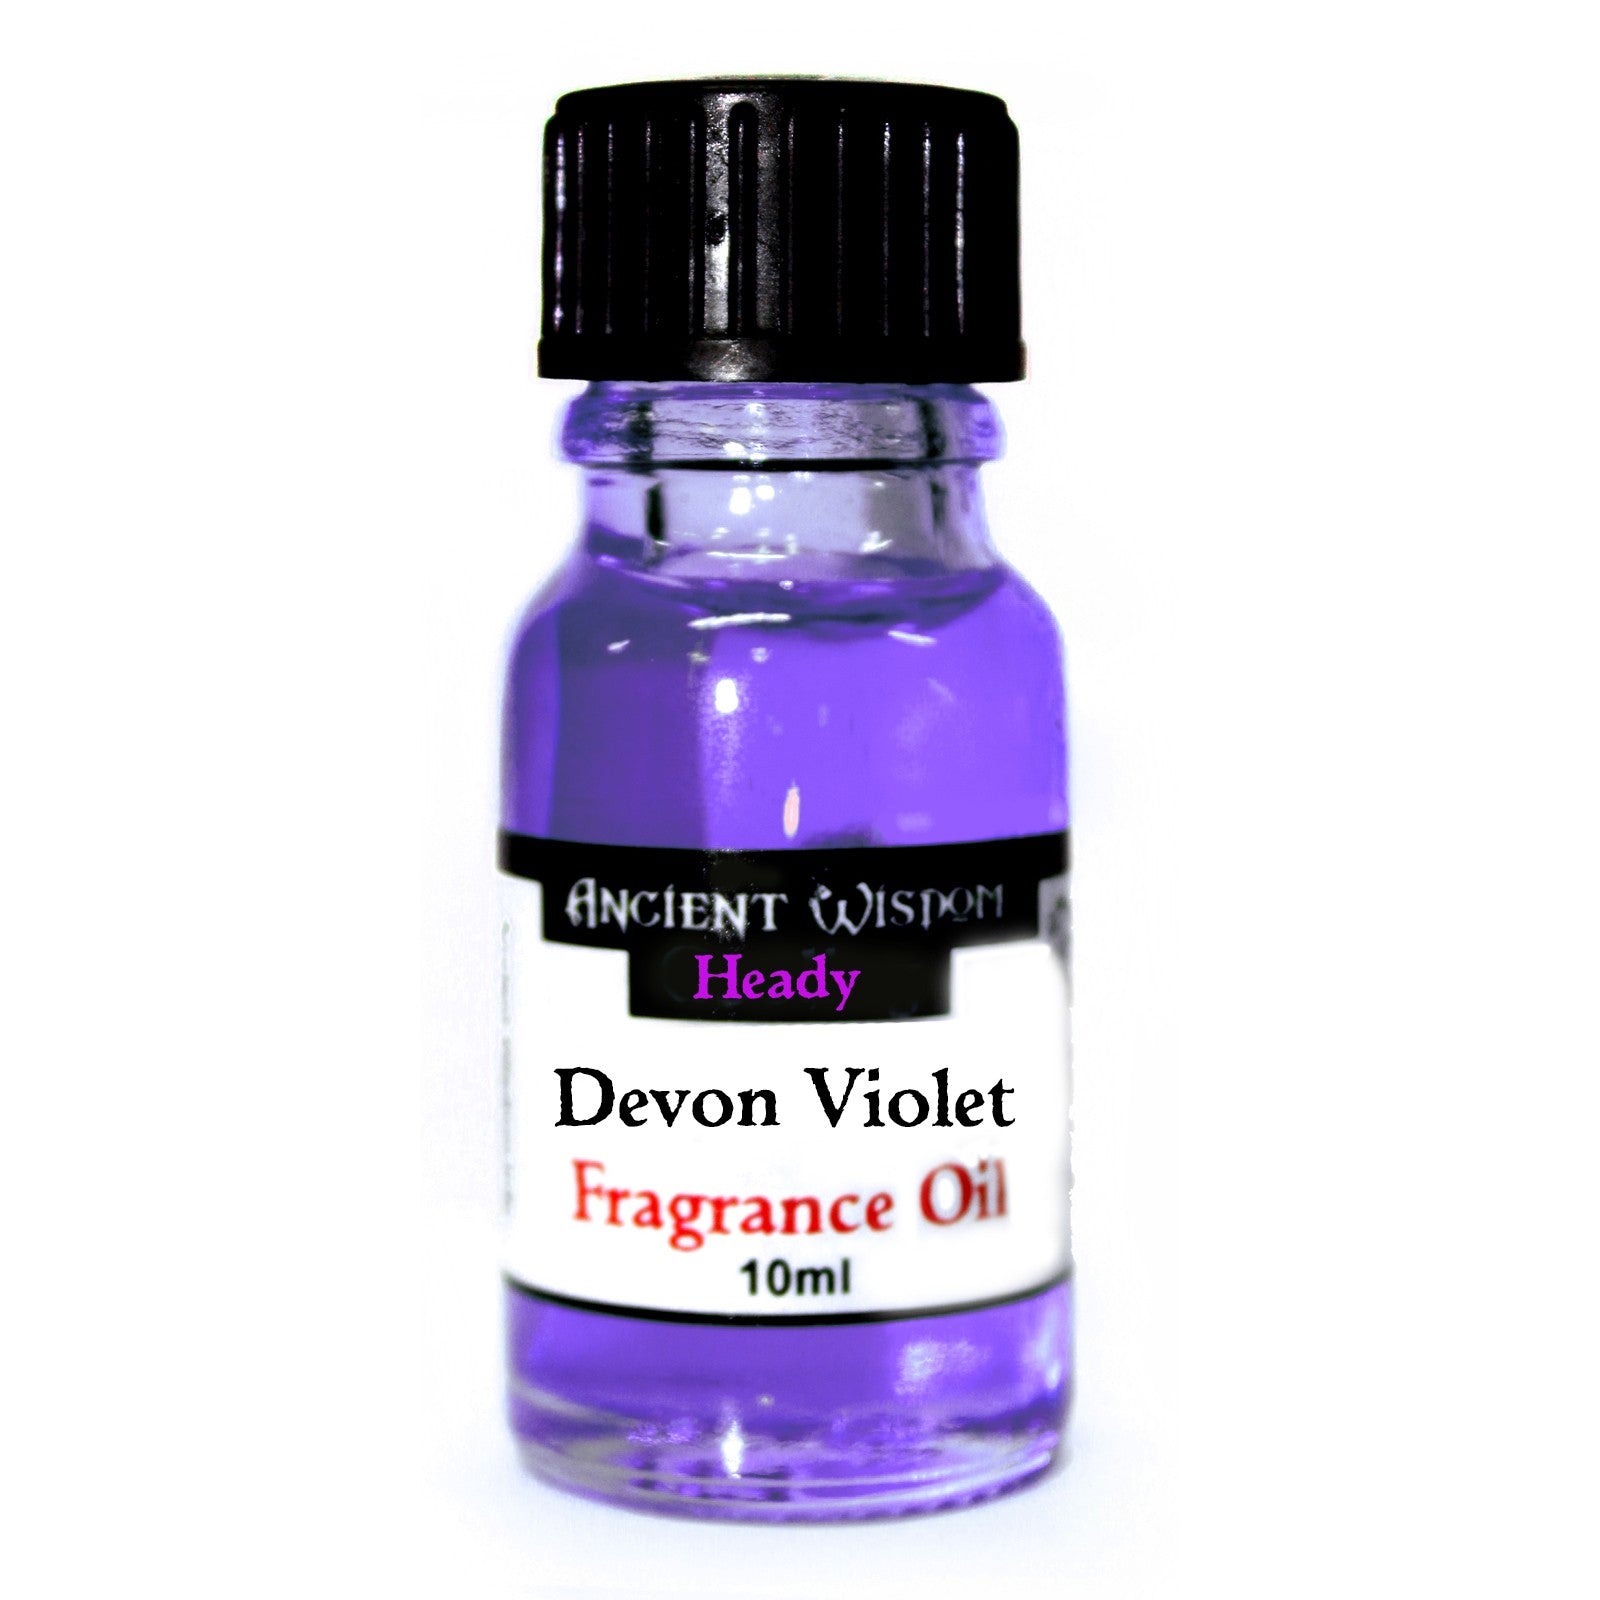 View 10ml Devon Violet Fragrance Oil information